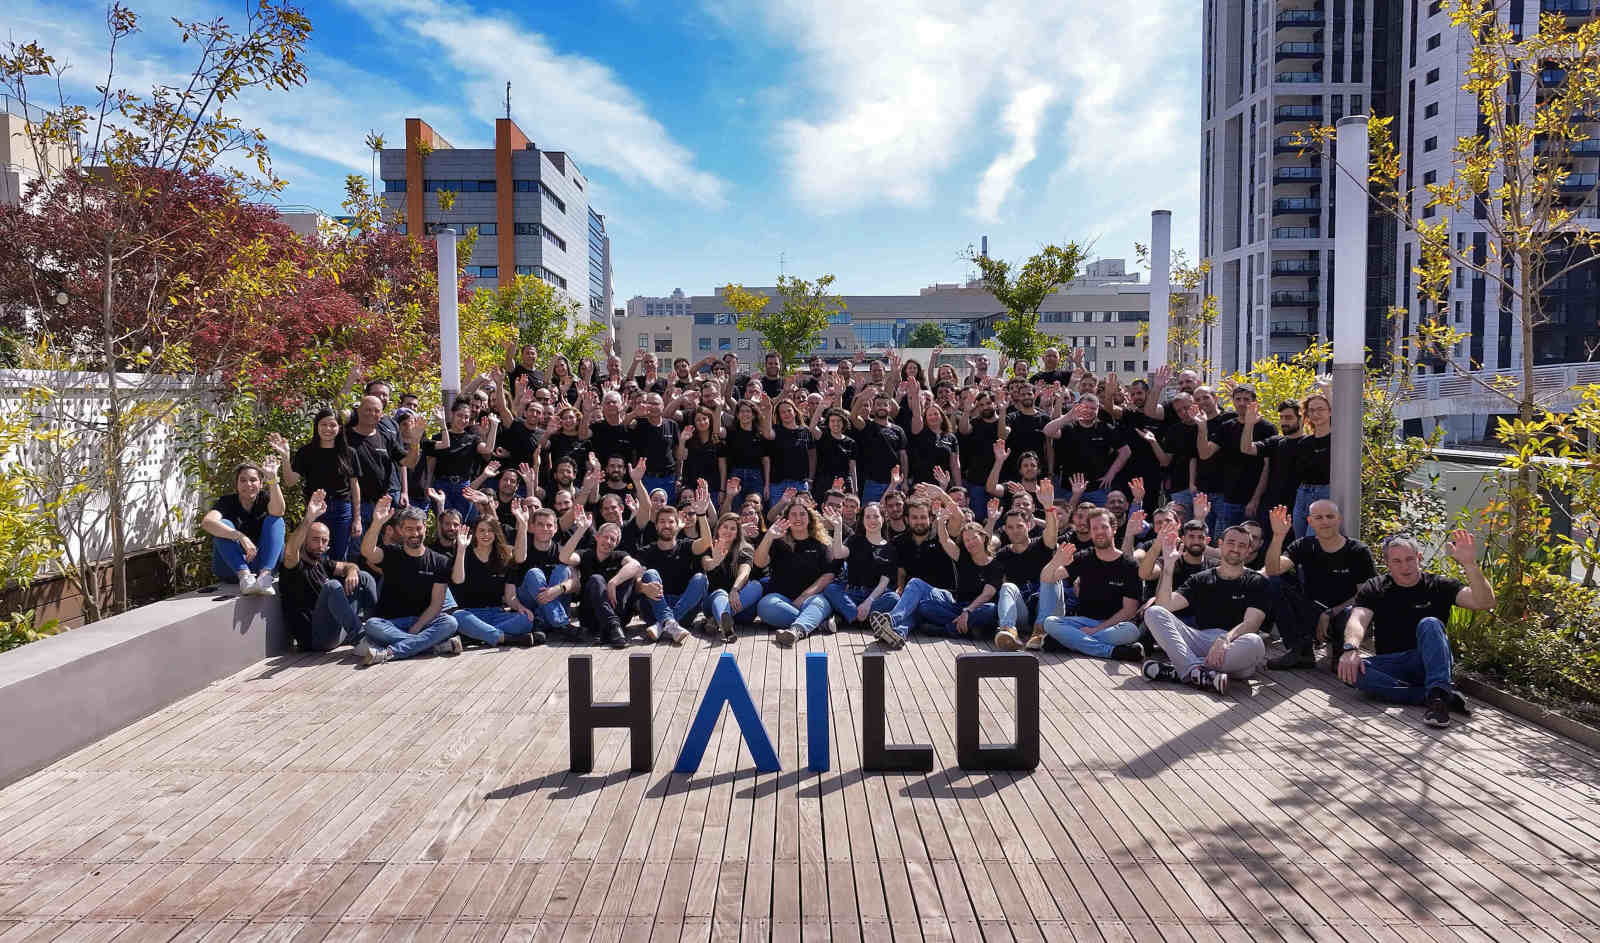 The Hailo team. Photo courtesy of Hailo.